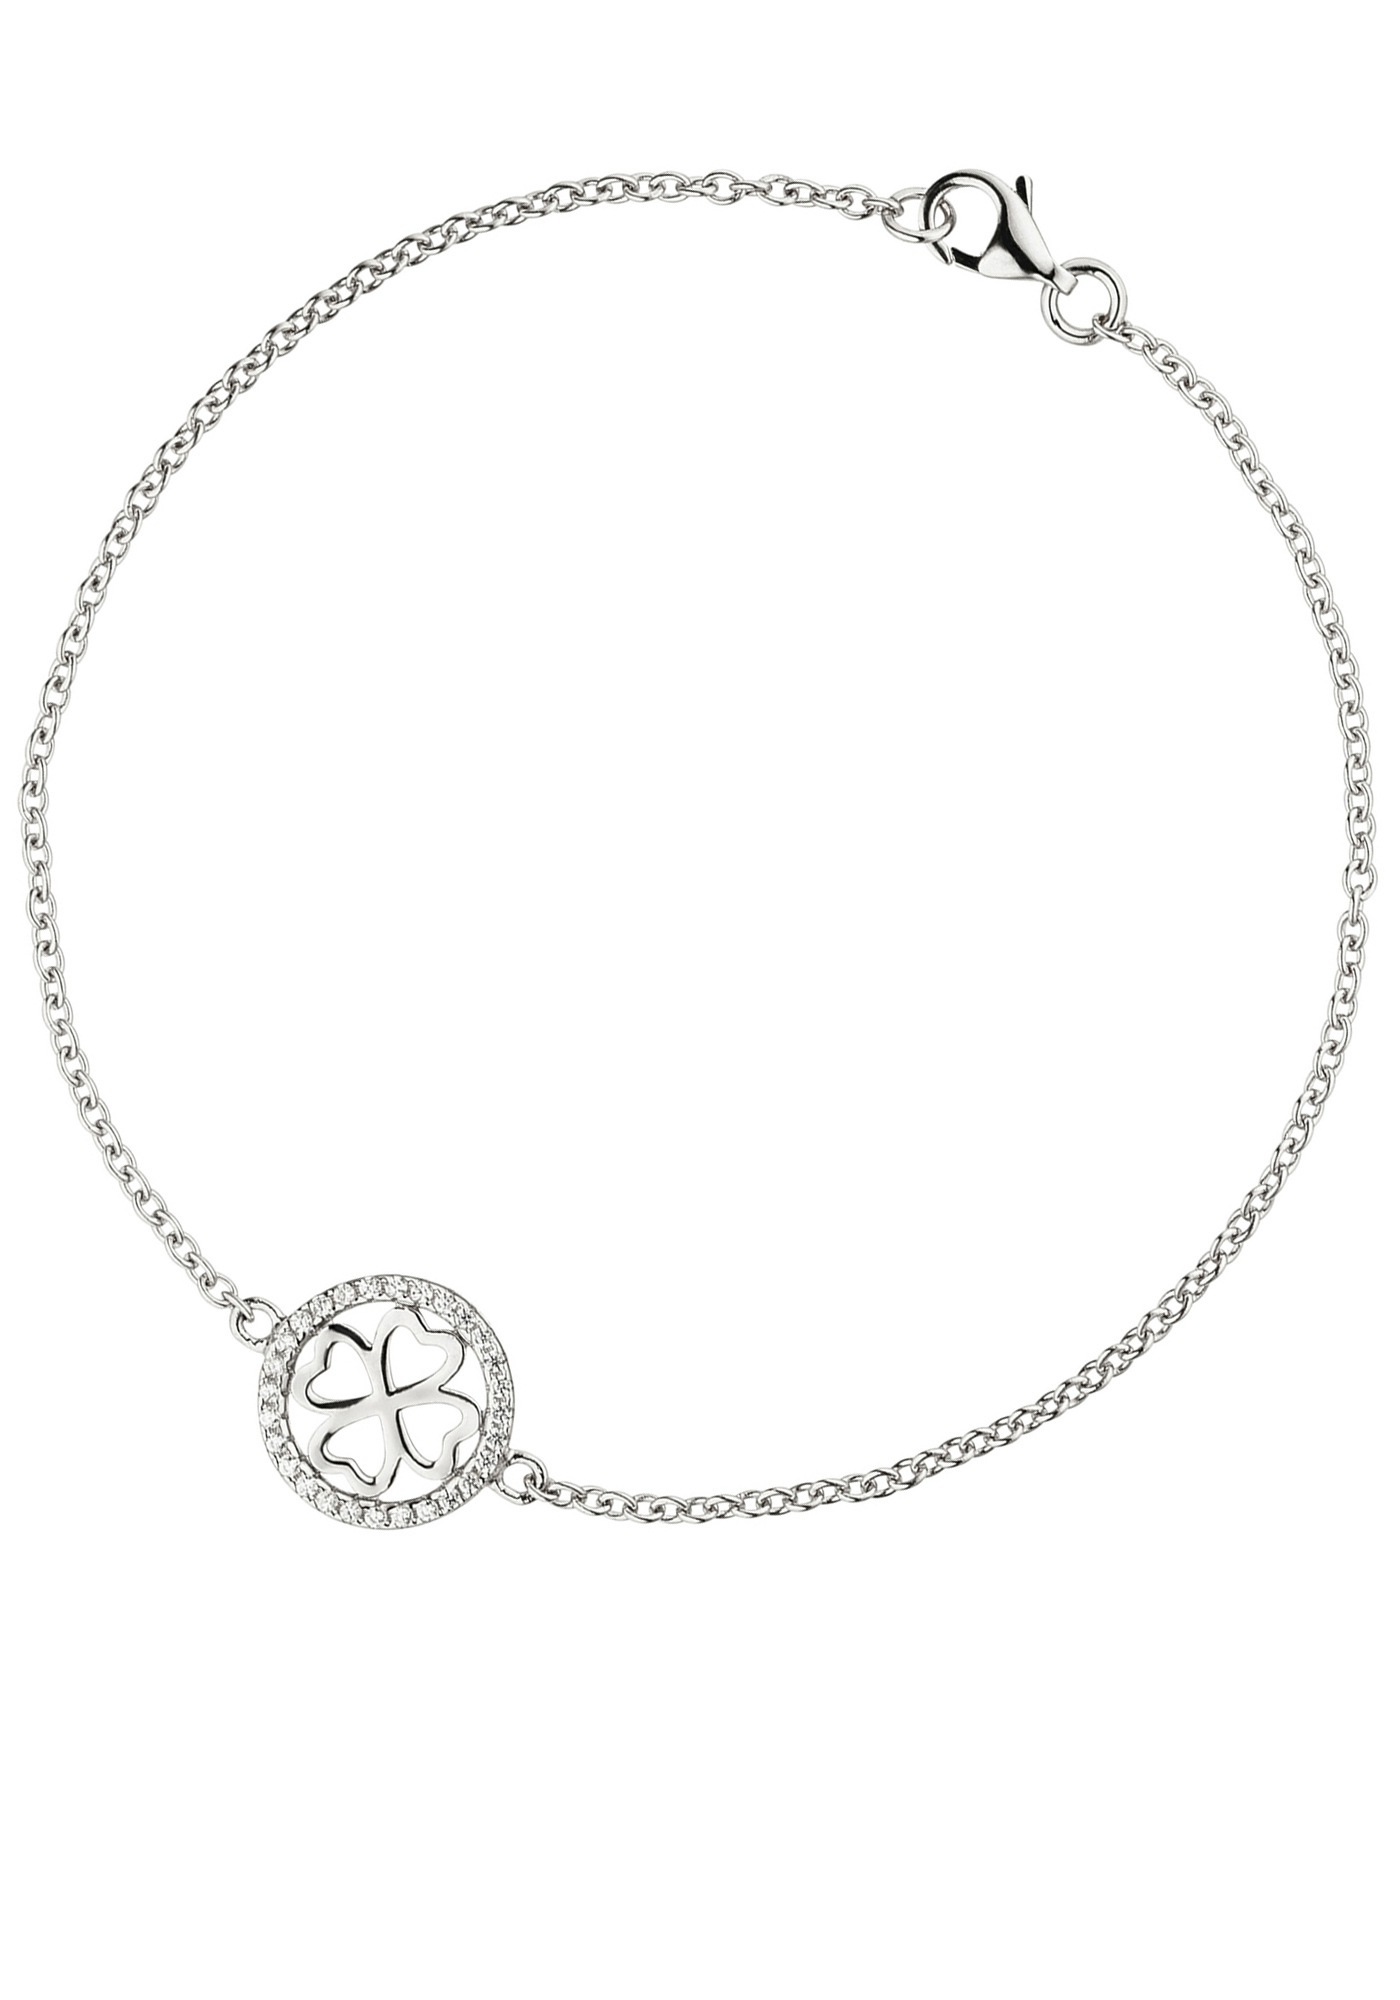 JOBO Silberarmband »Kleeblatt-Armband« 925 Silber rhodiniert mit 28  Zirkonia 19 cm